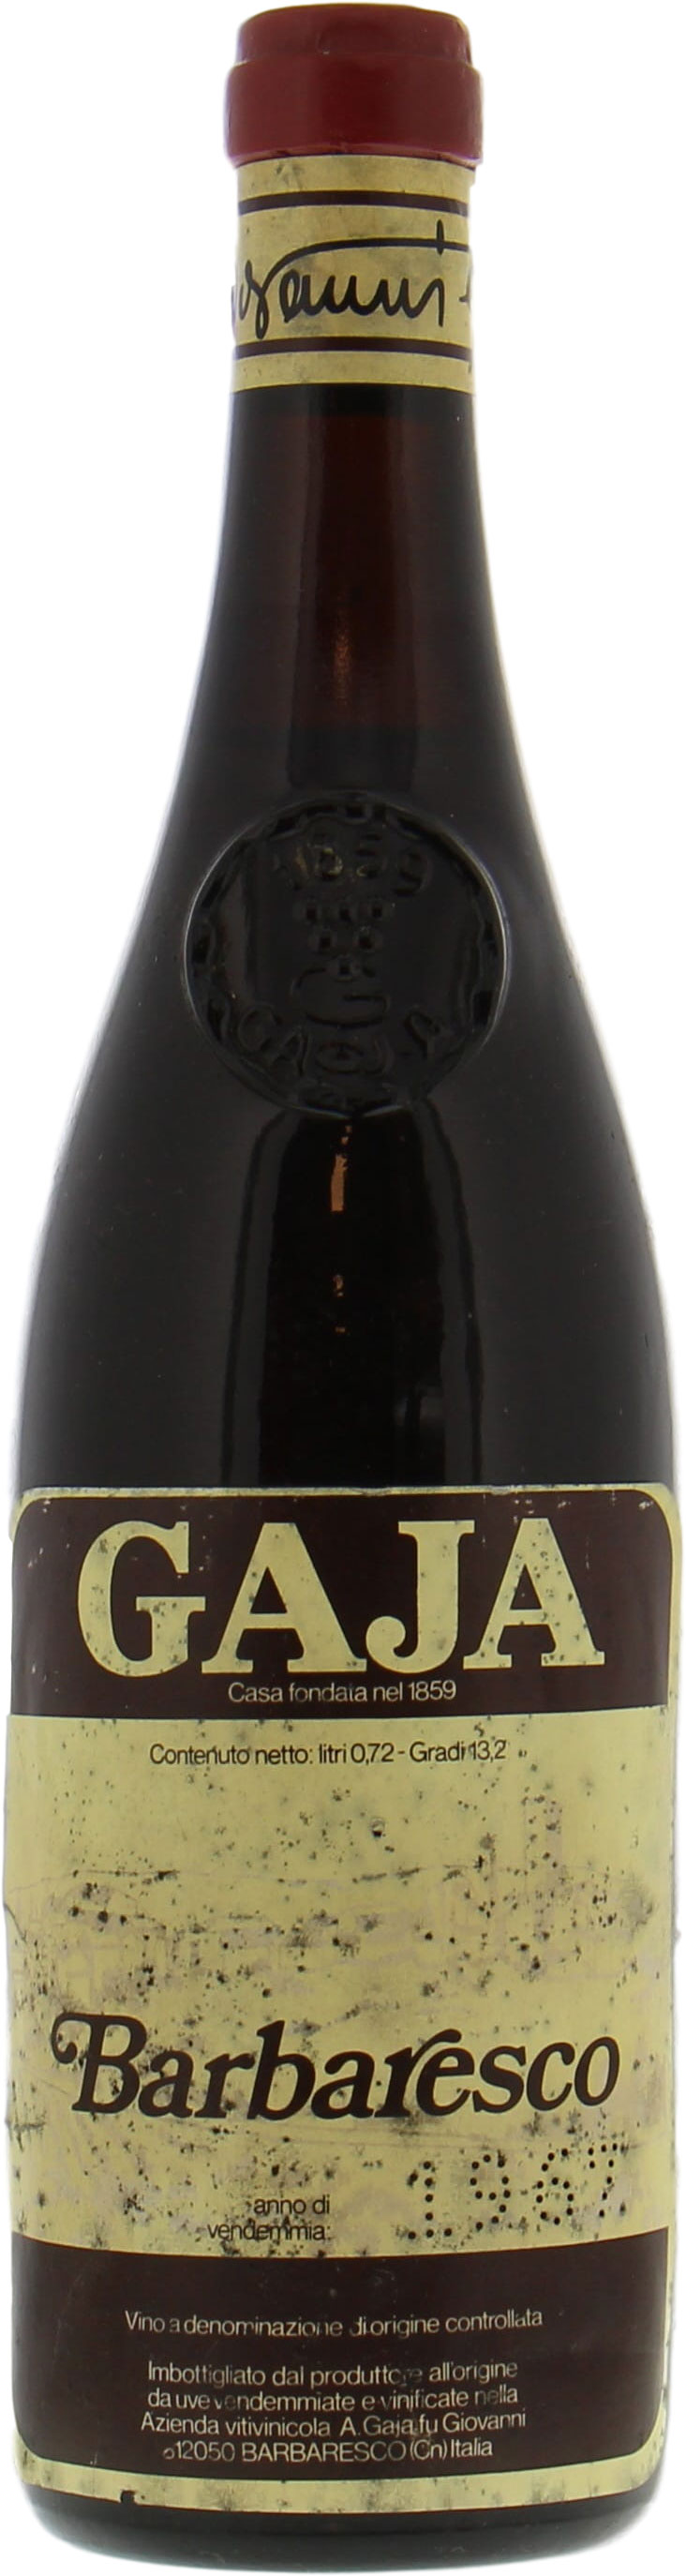 Gaja - Barbaresco 1967 Perfect